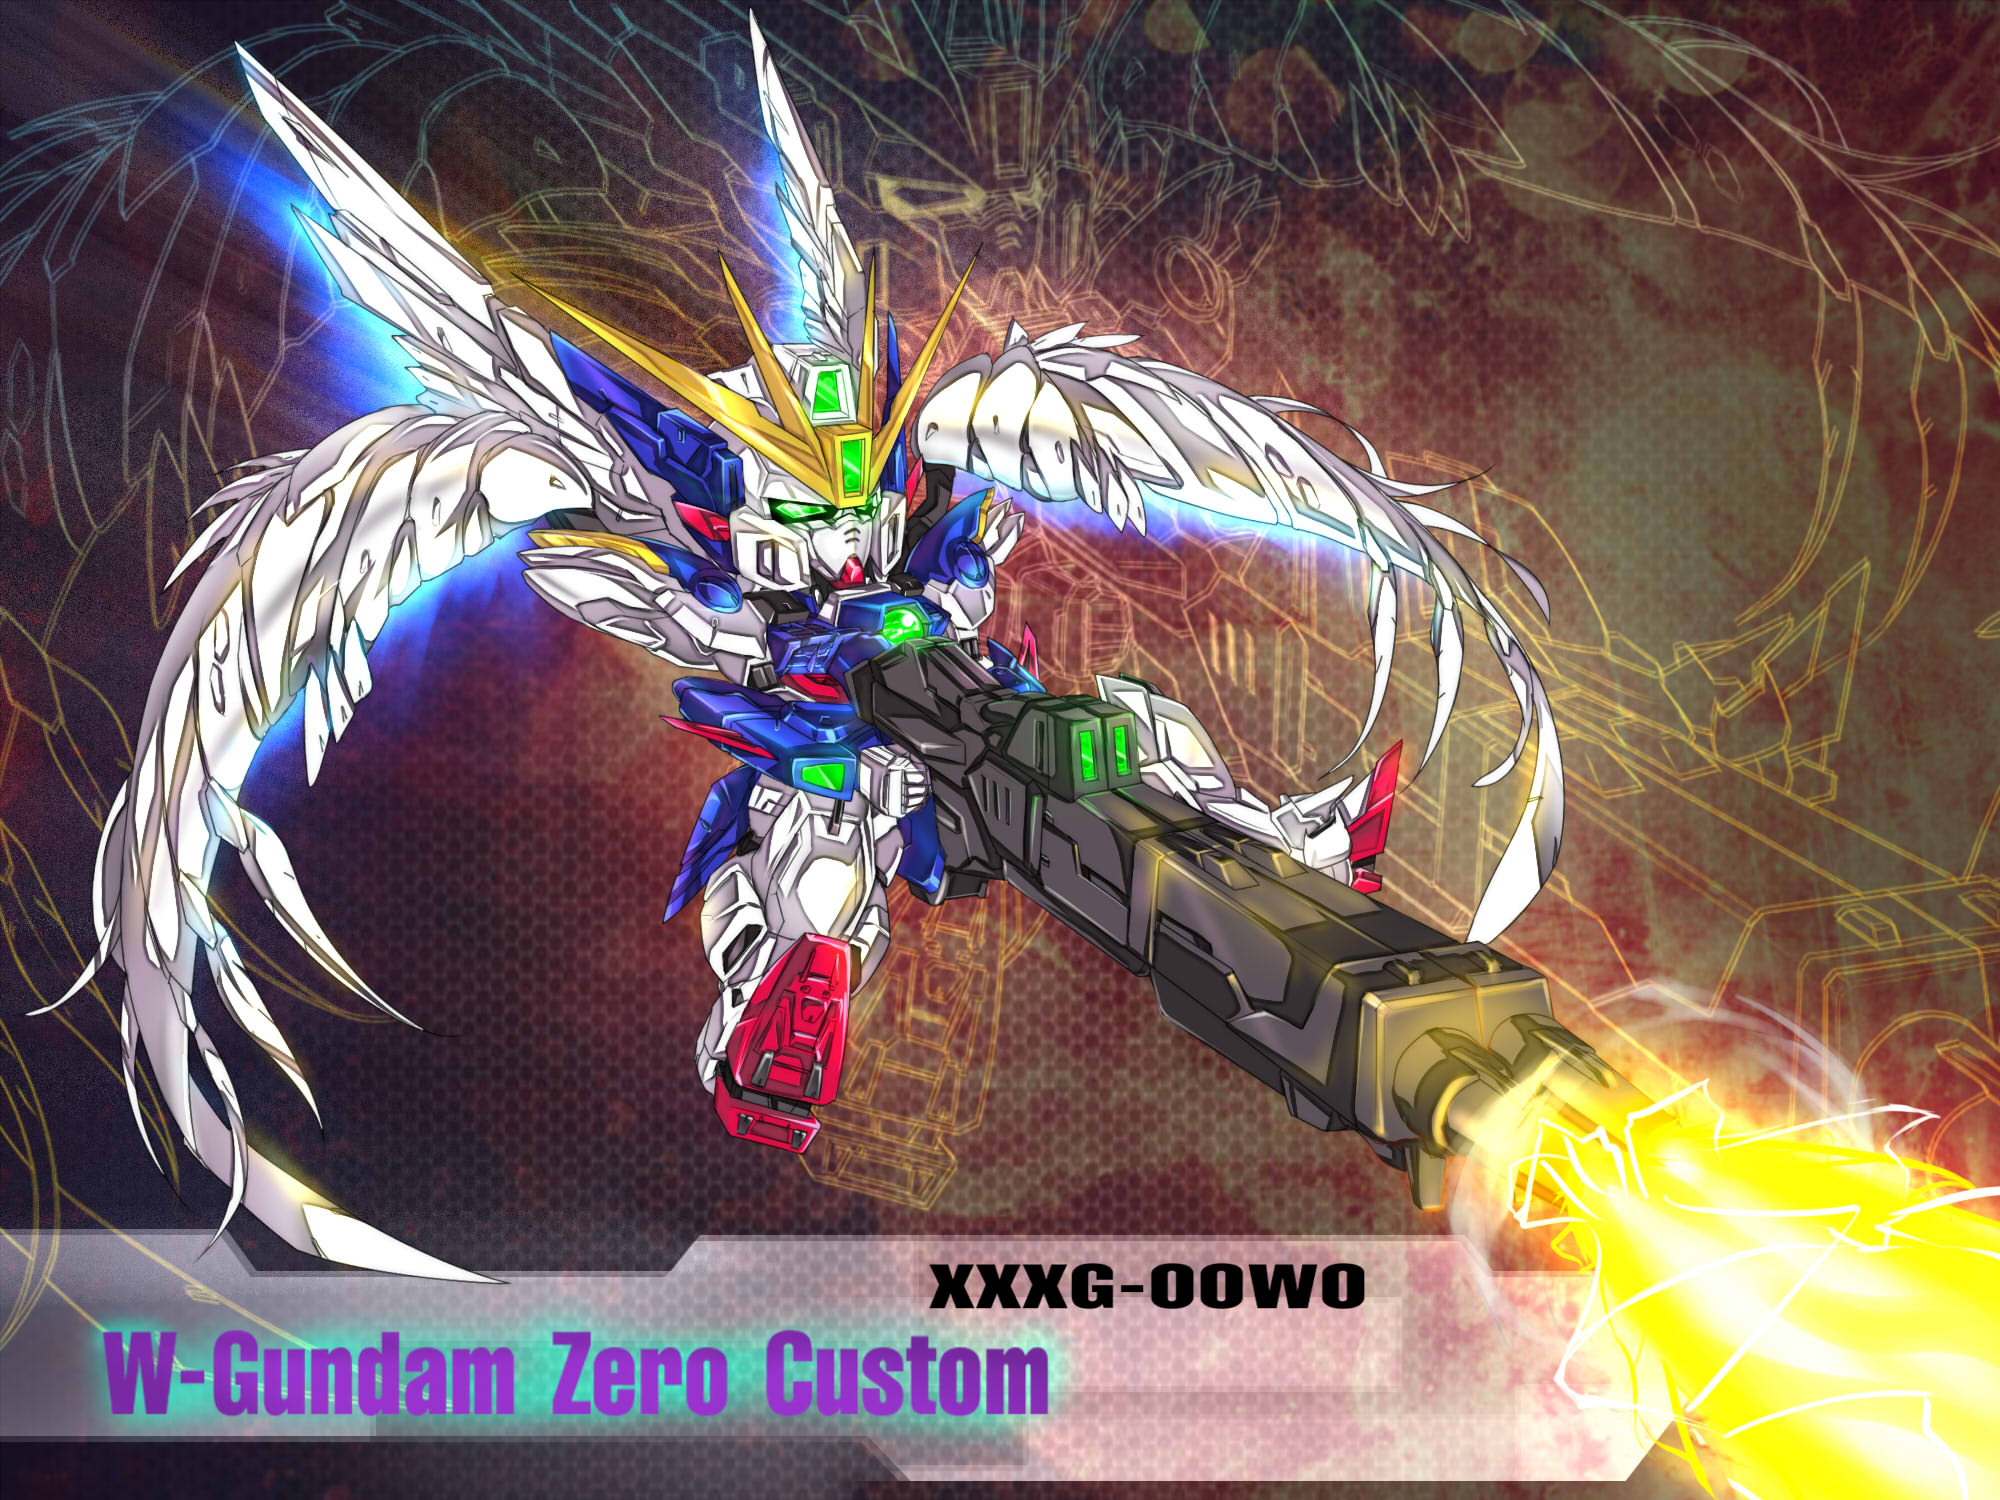 Anime Mechs Super Robot Wars Gundam Mobile Suit Gundam Wing Wing Gundam Zero Artwork Digital Art Fan 2000x1500